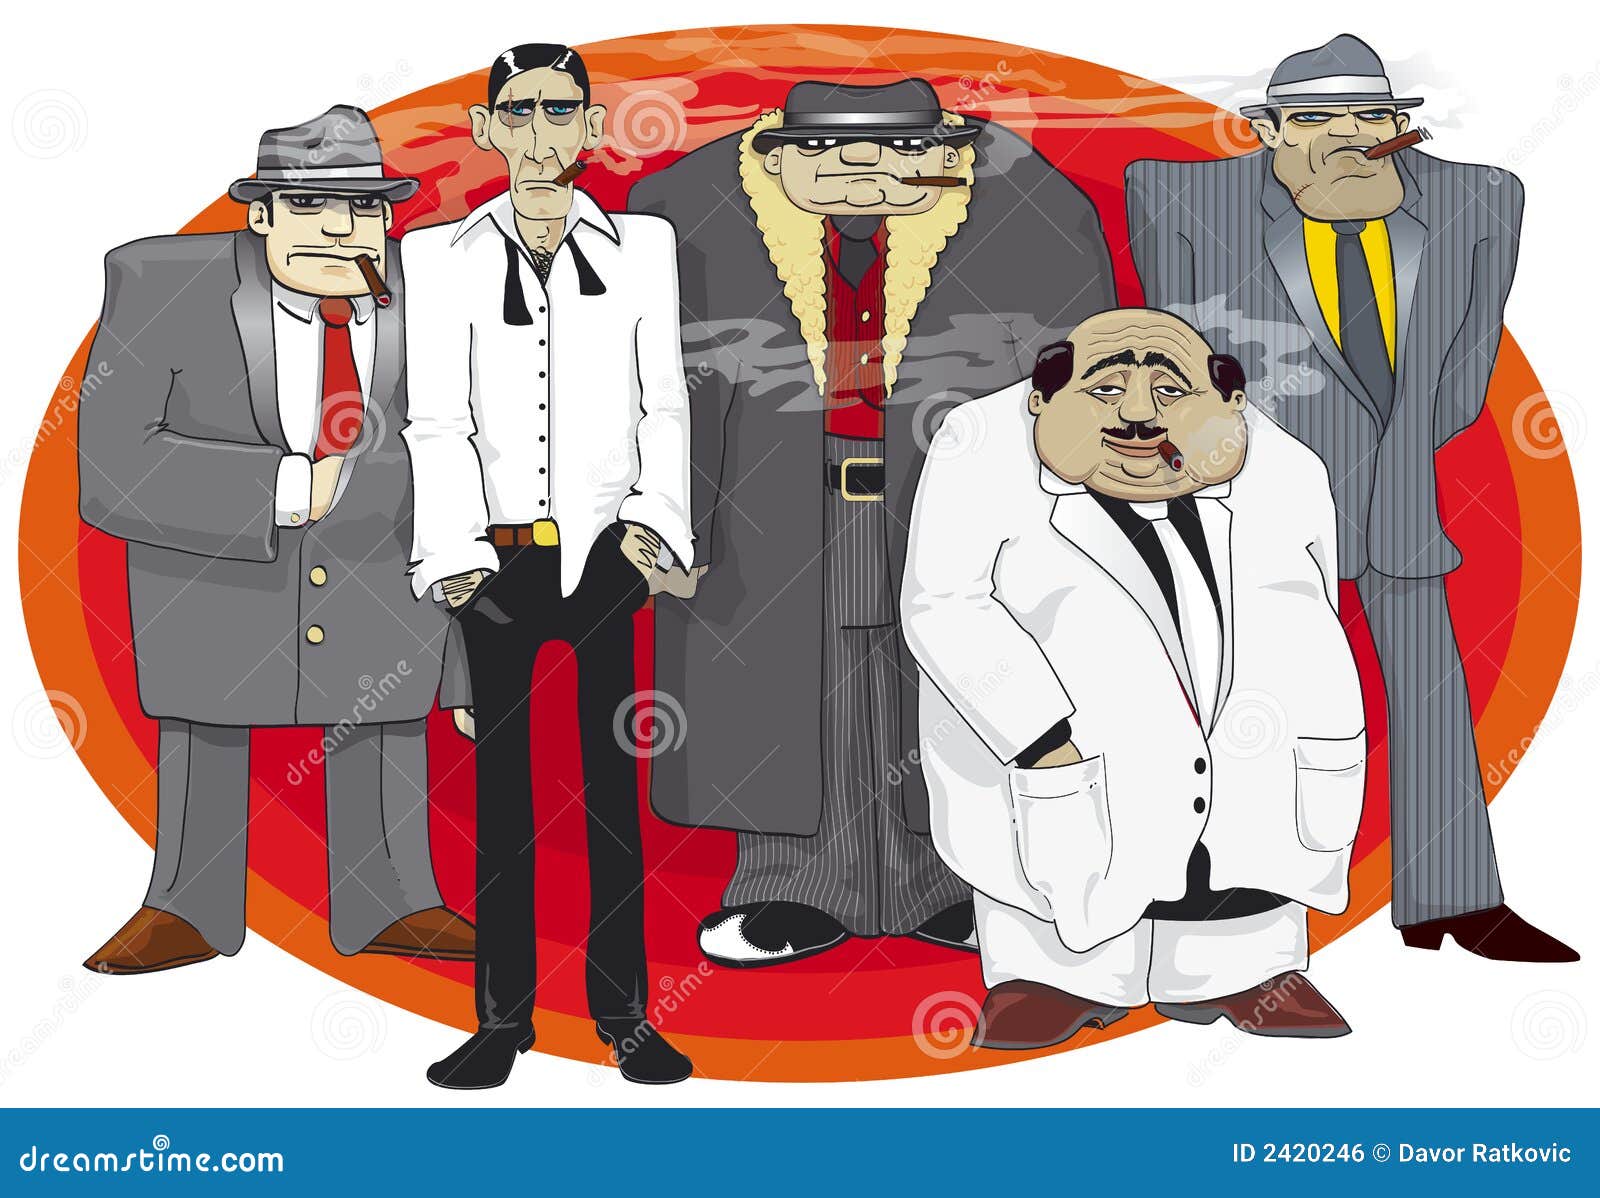 The Mafia Cartoon Vector | CartoonDealer.com #23379269